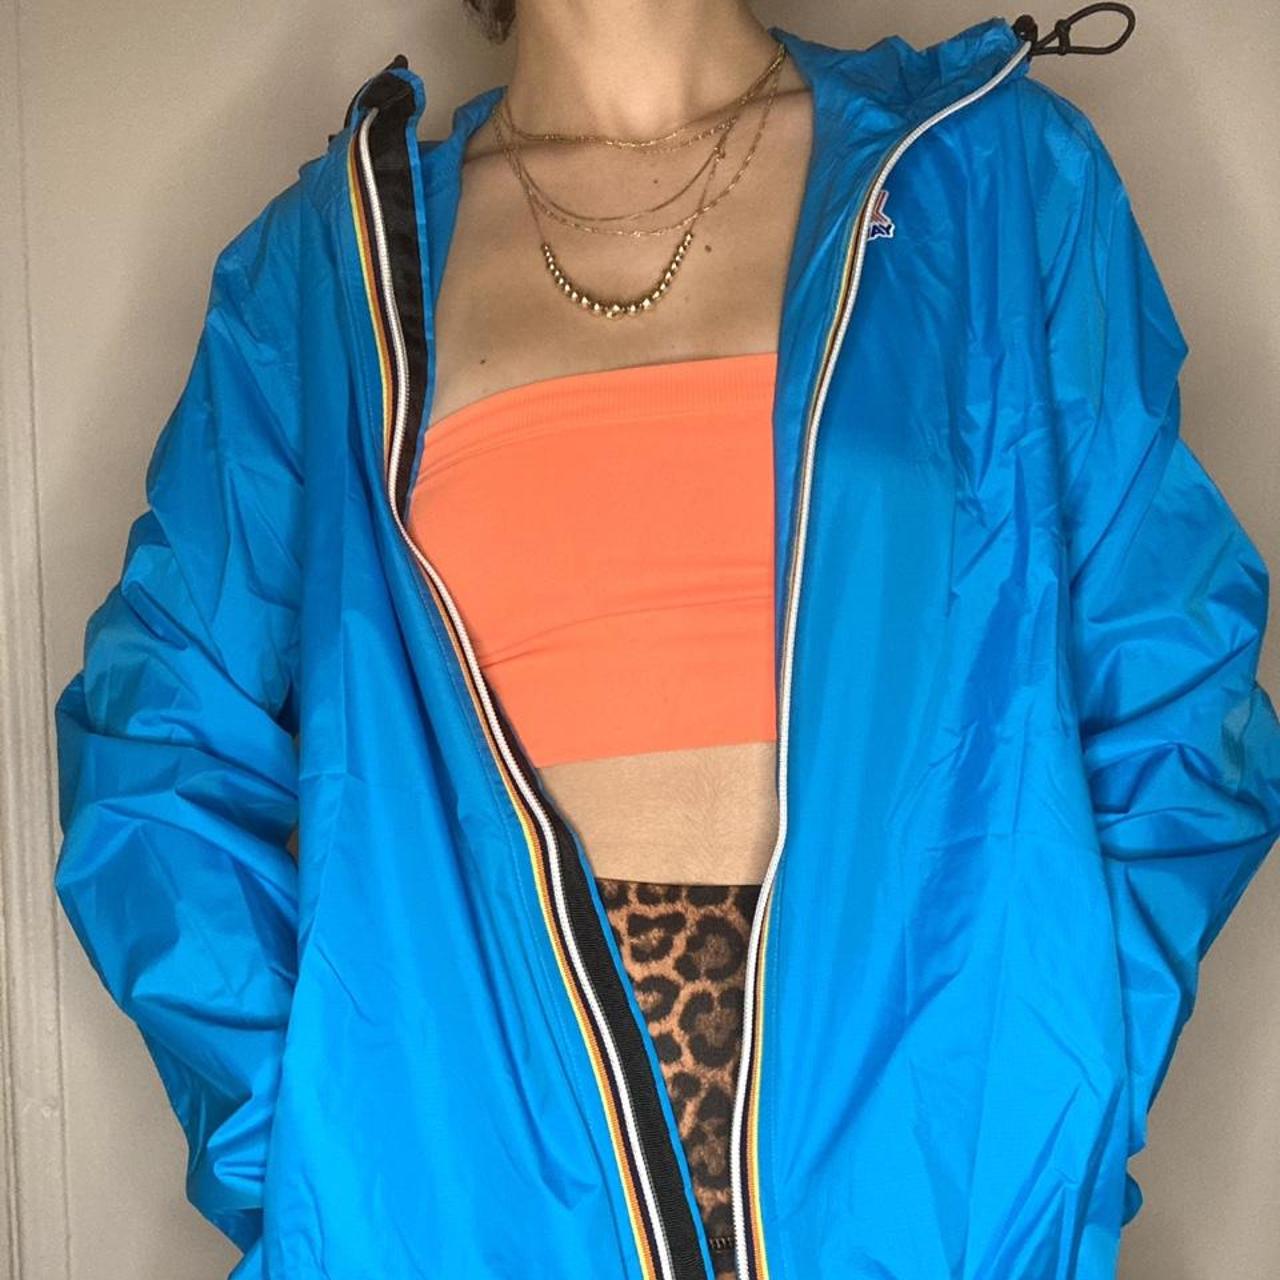 Product Image 2 - PRODUCT: Rain jacket 
BRAND: K-way
COLOR: